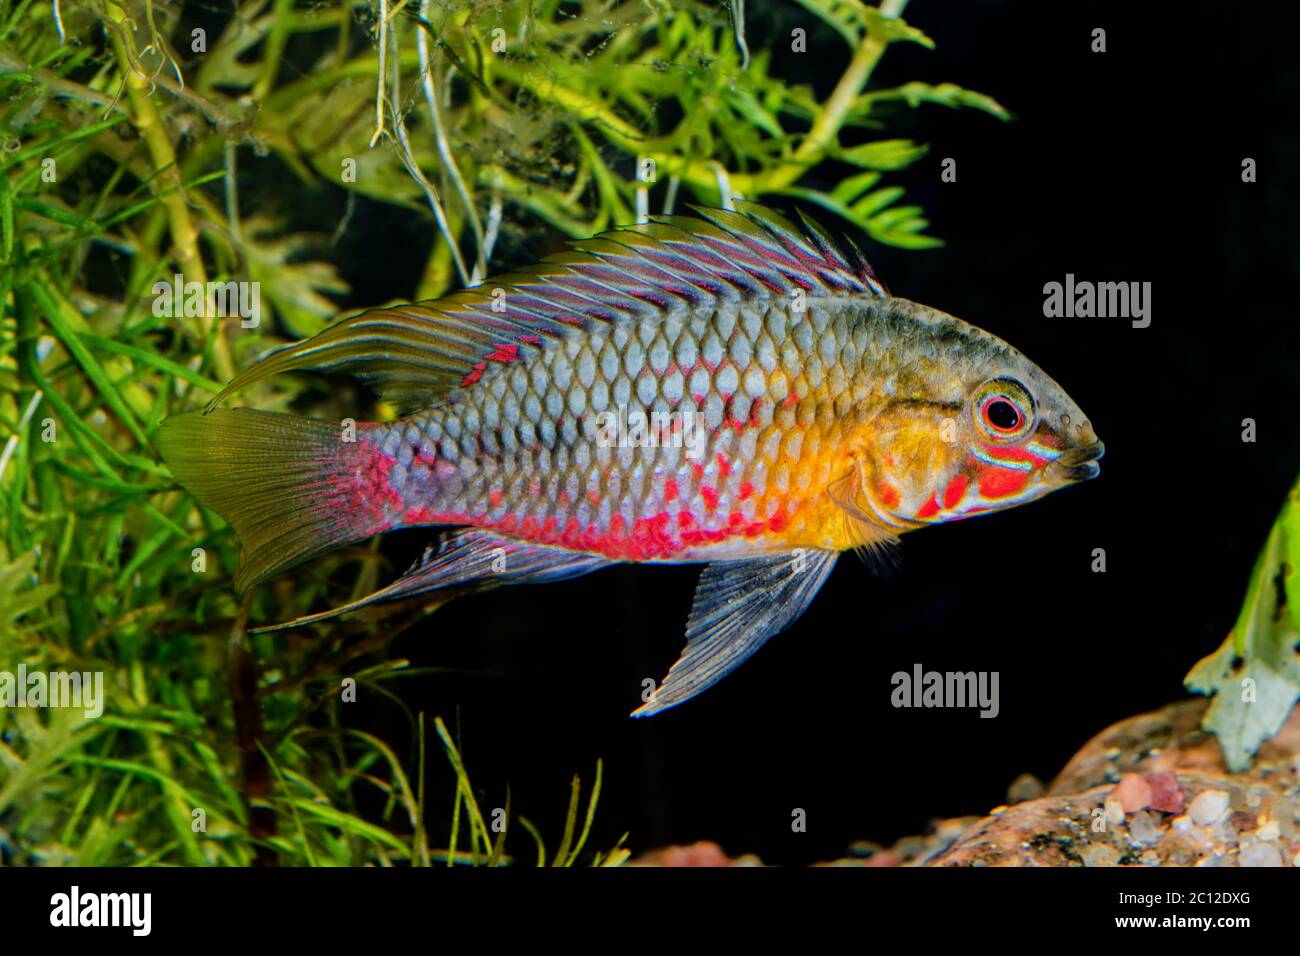 Cichlid fish Apistogramma hongsloi in a aquarium Stock Photo